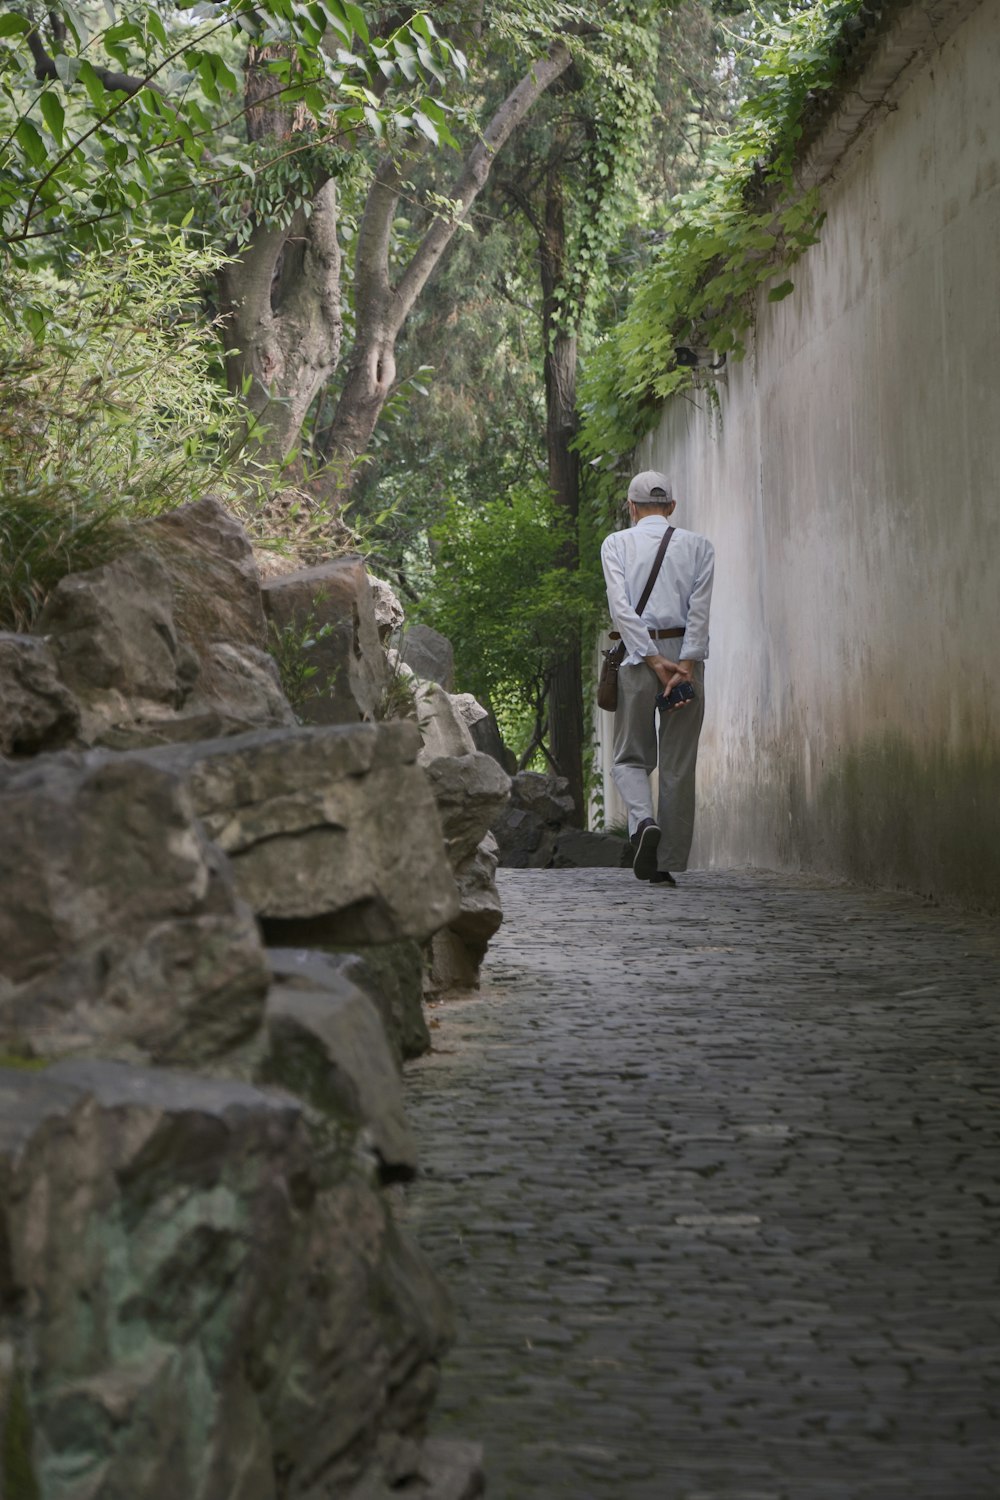 a man is walking down a cobblestone street